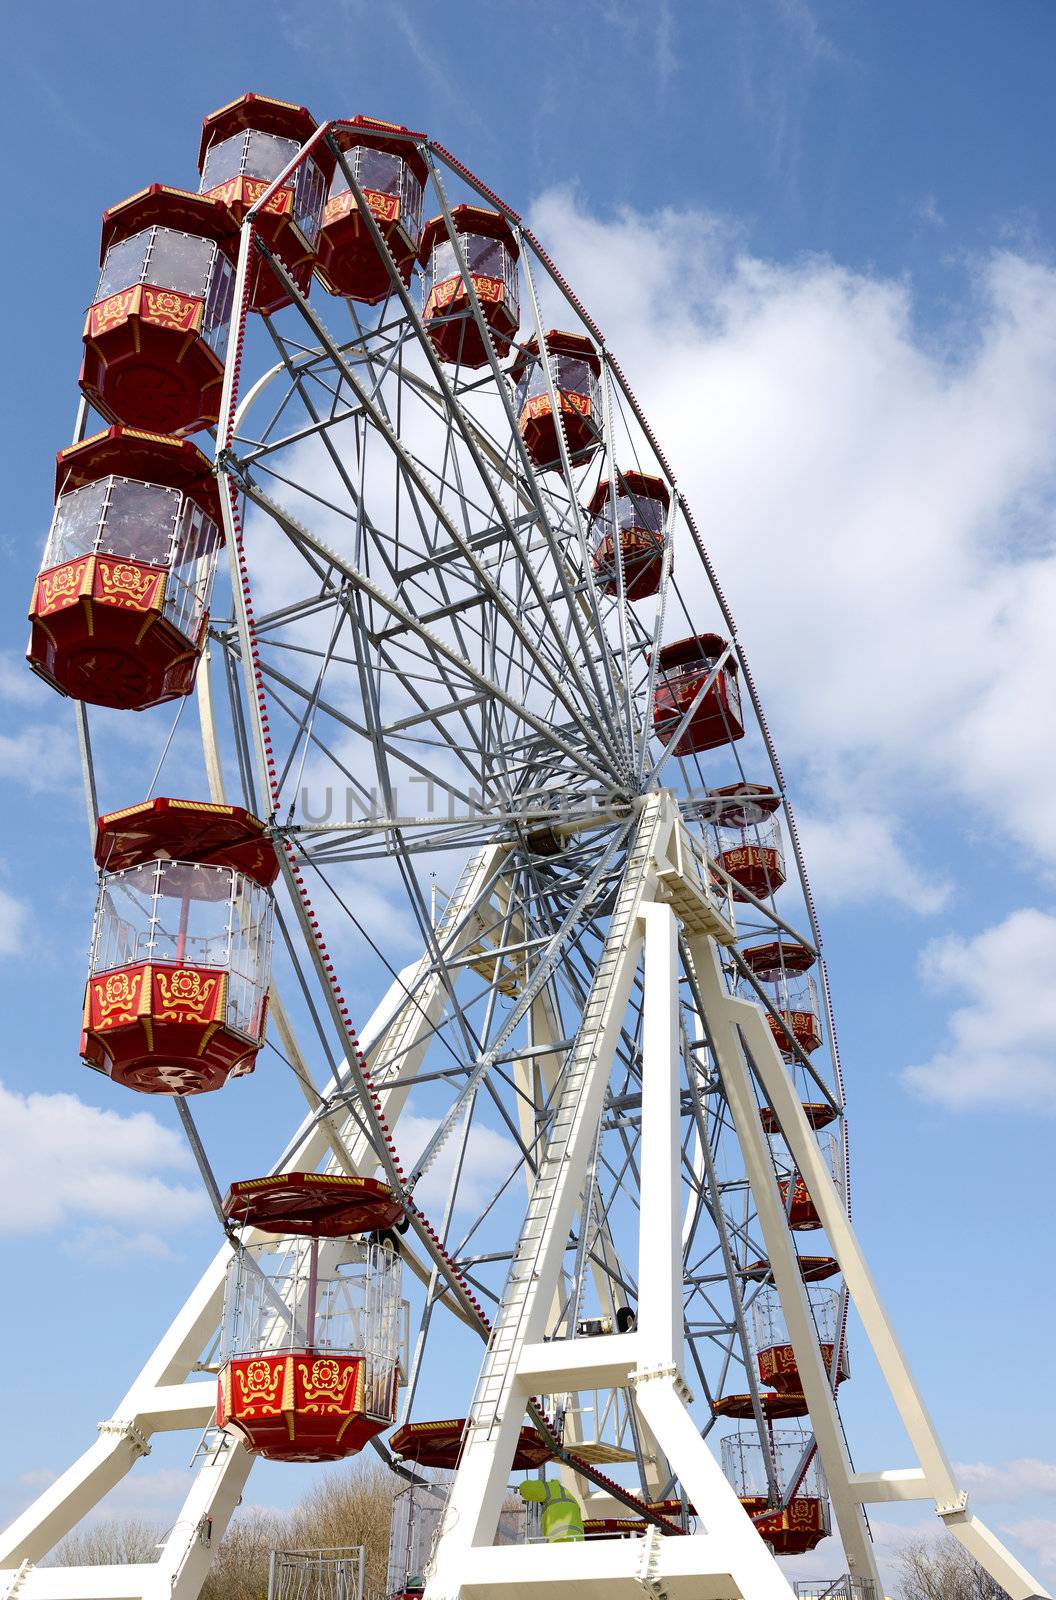  Ferris Wheel by hyrons